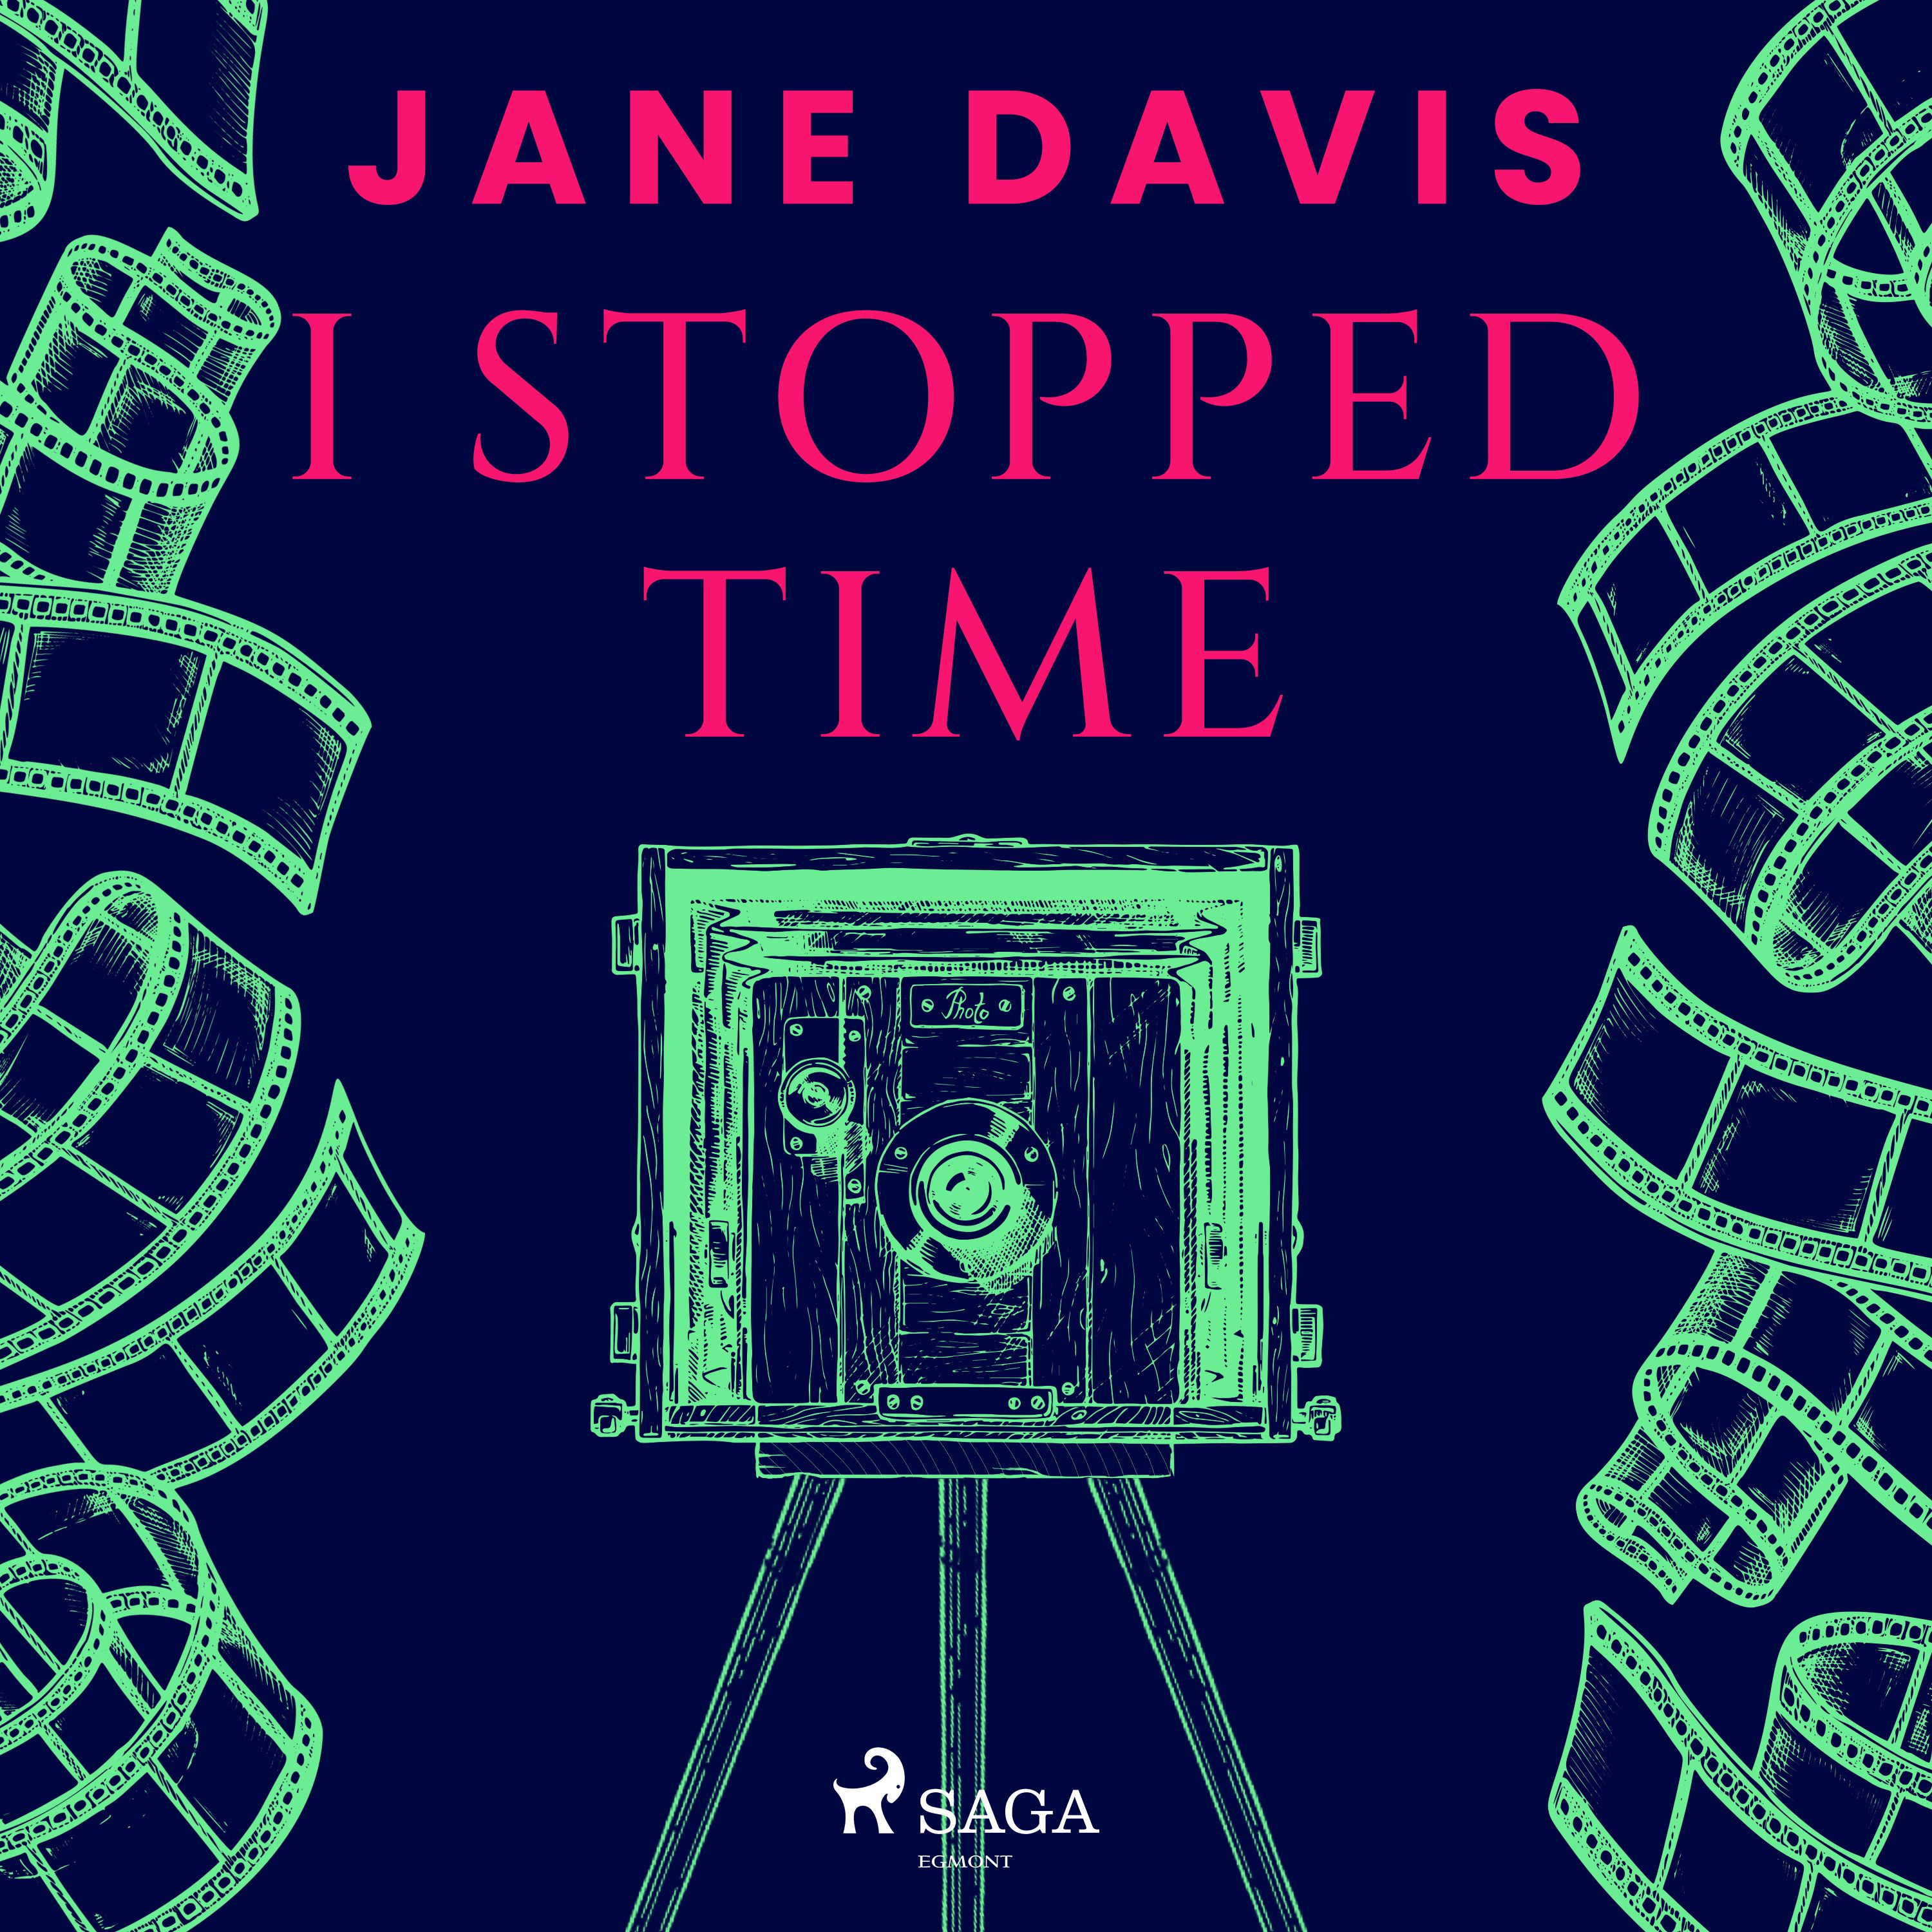 I Stopped Time, audiobook by Jane Davis